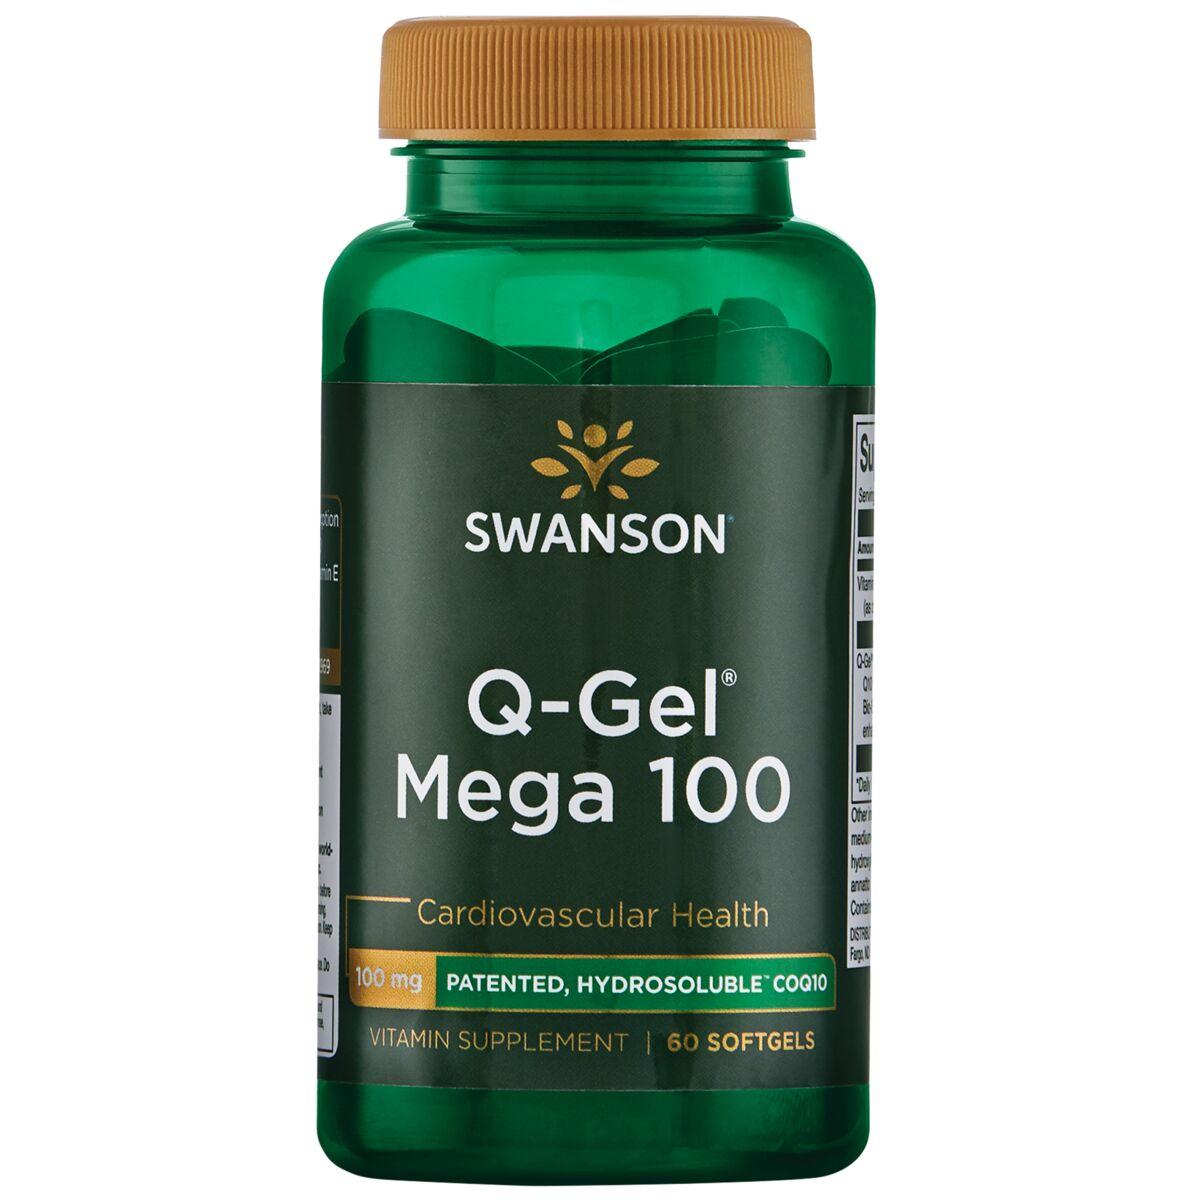 Swanson Ultra Q-Gel Mega 100 Supplement Vitamin | 100 mg | 60 Soft Gels